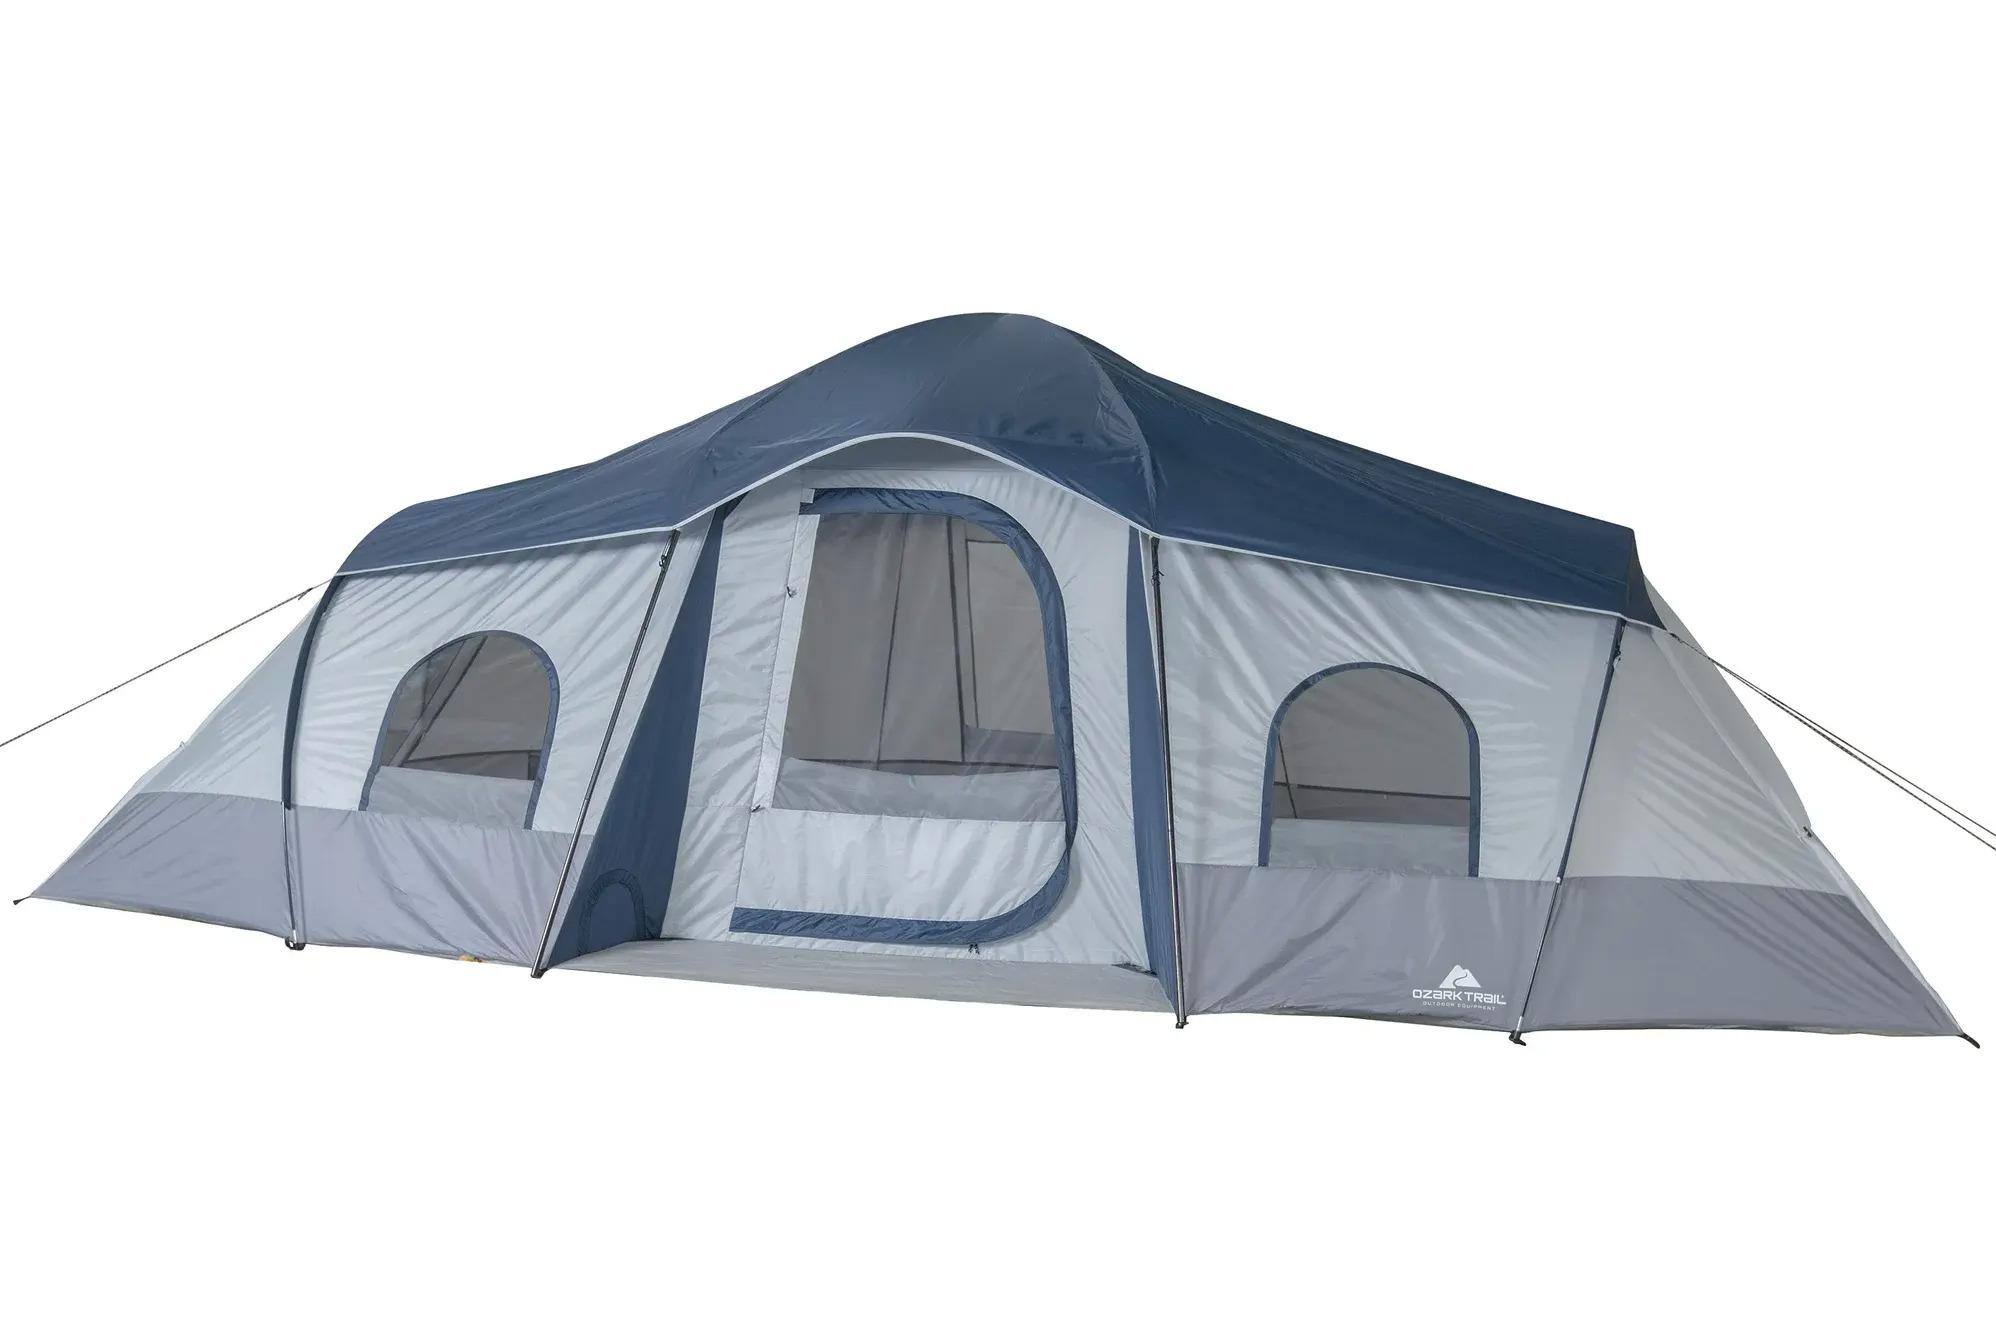 Ozark Trail 10-Person Cabin Tent for $99 Shipped